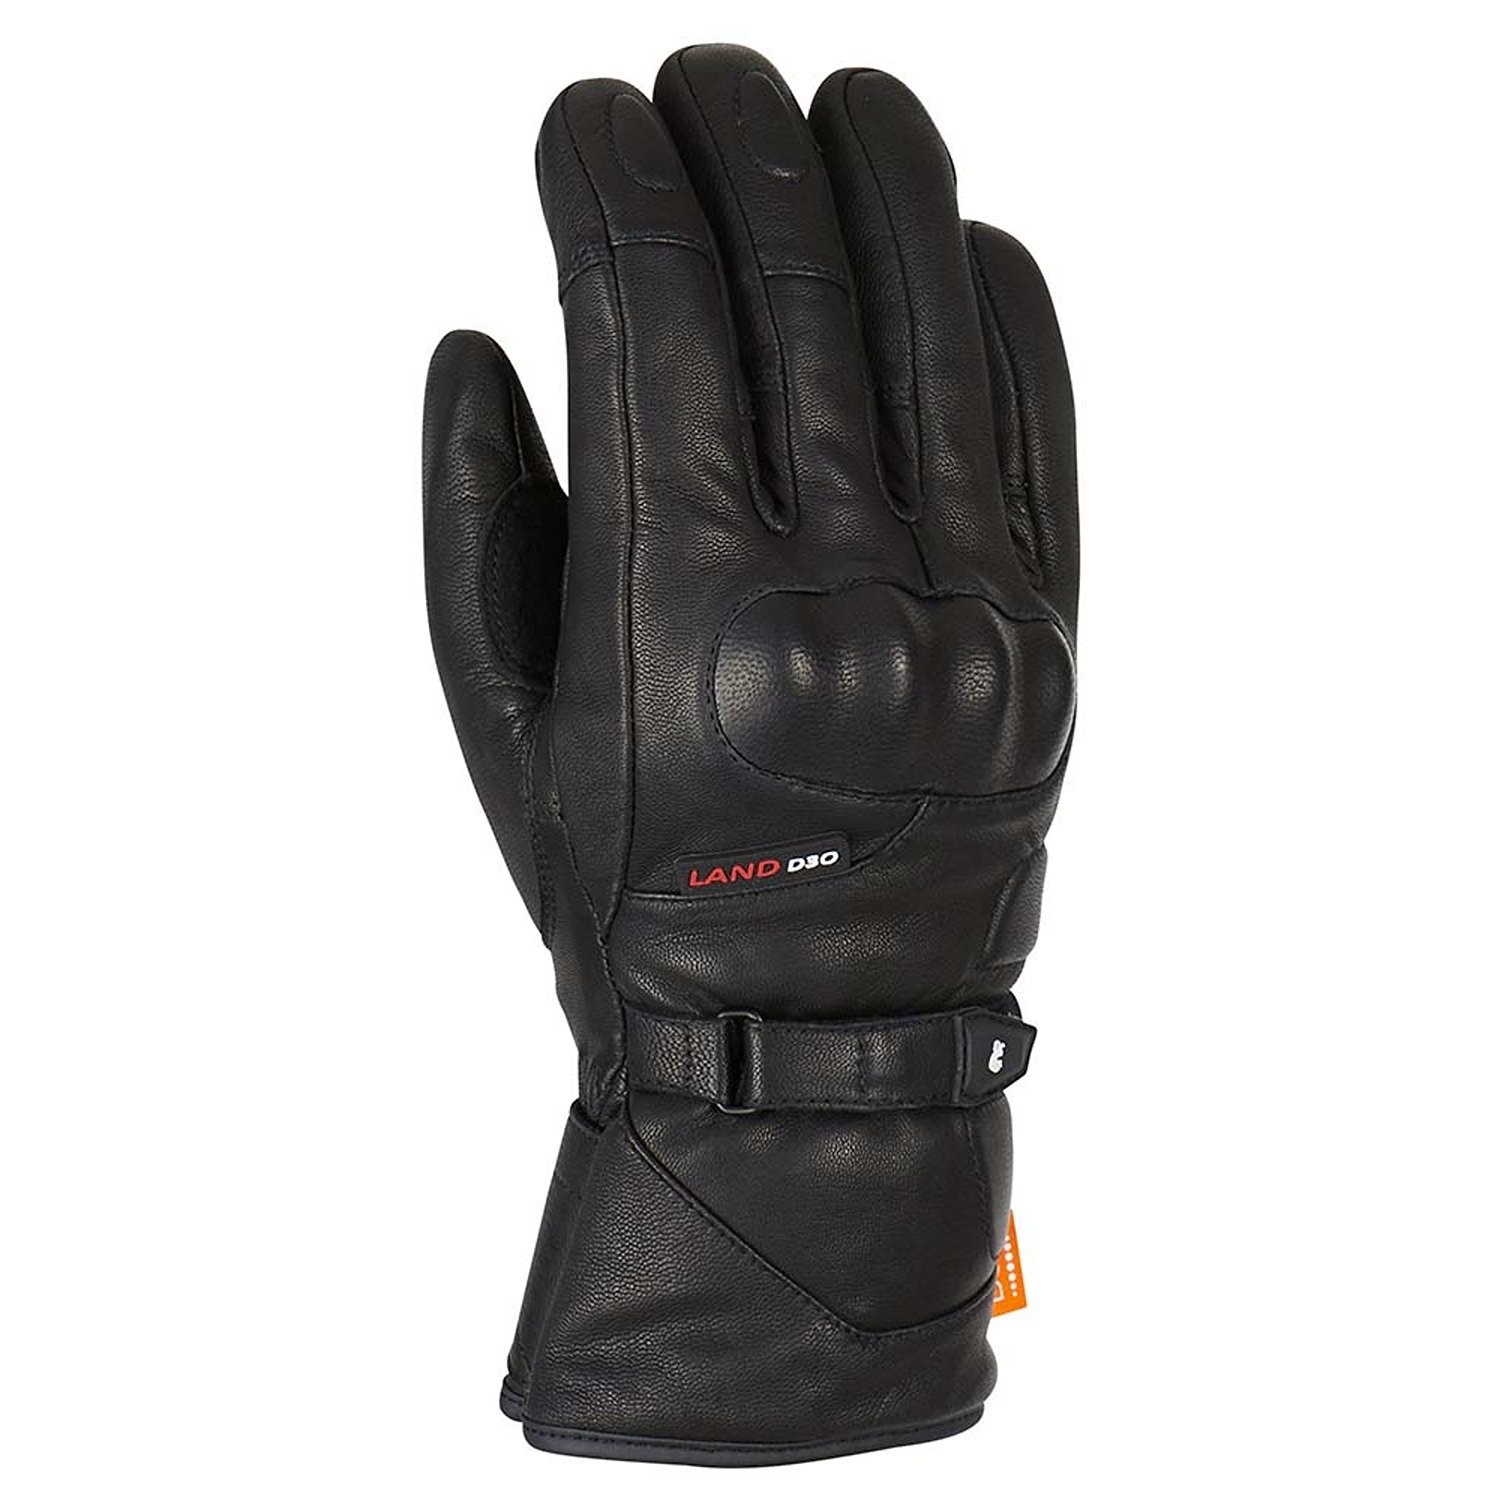 Image of Furygan Land DK D30 Gloves Black Taille L